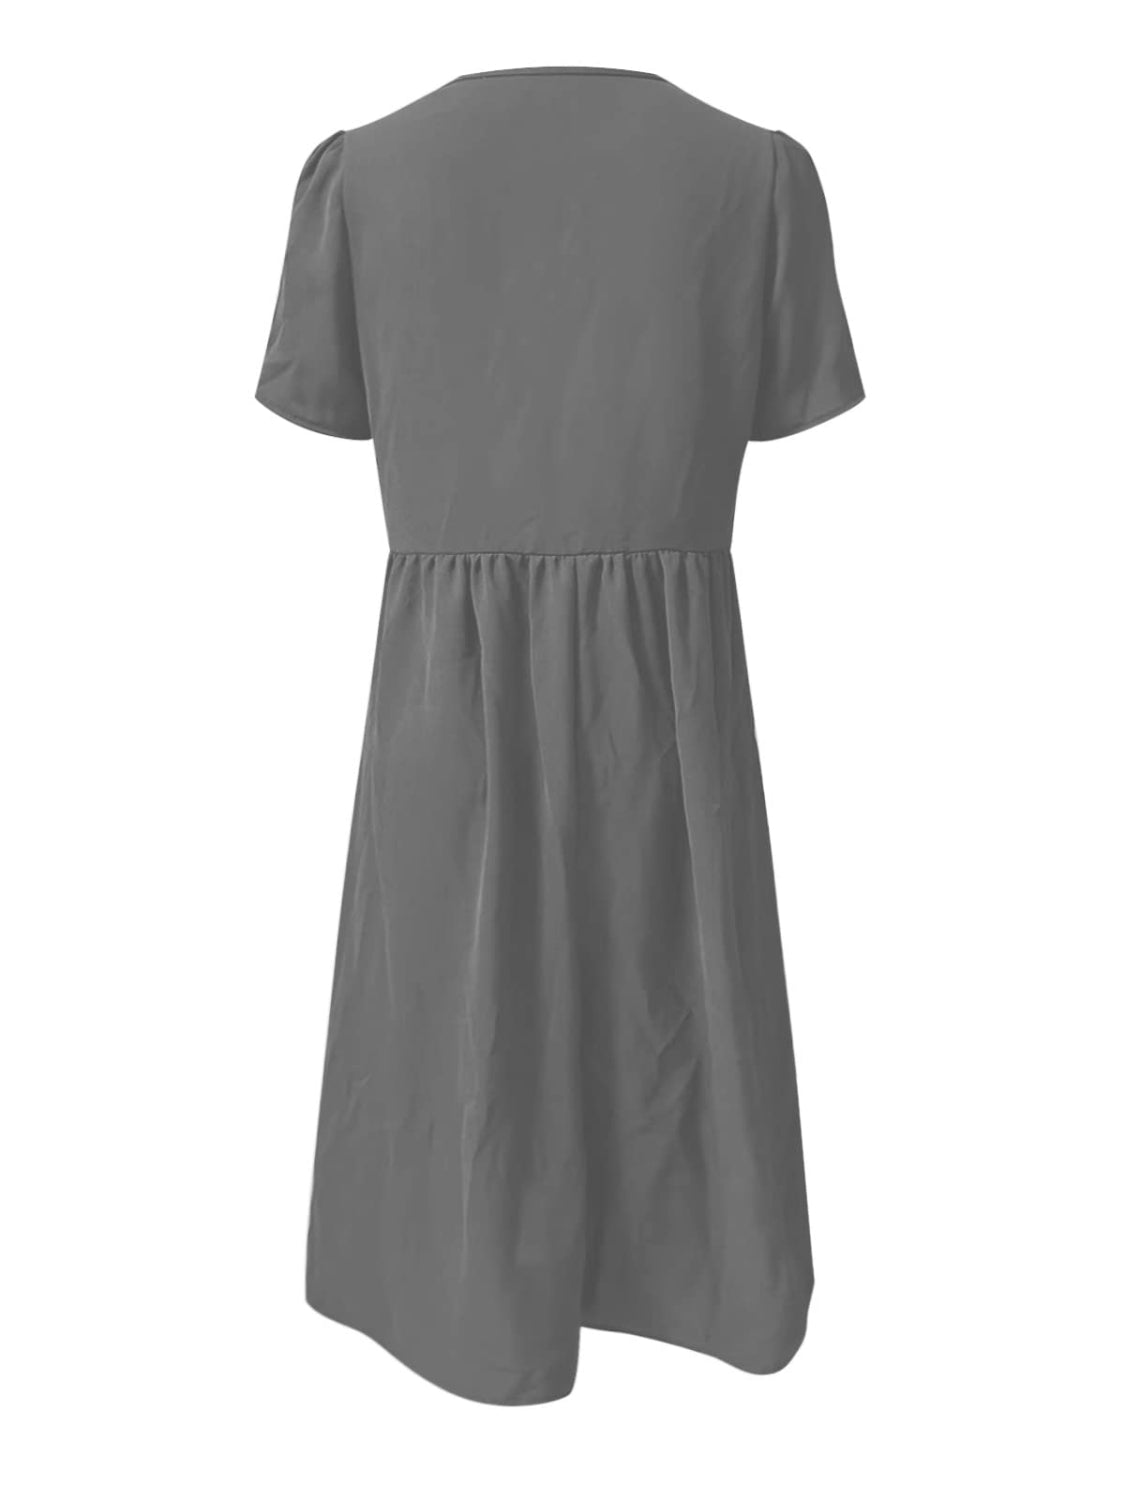 STUNNLY  Full Size Lace Detail V-Neck Short Sleeve Dress   